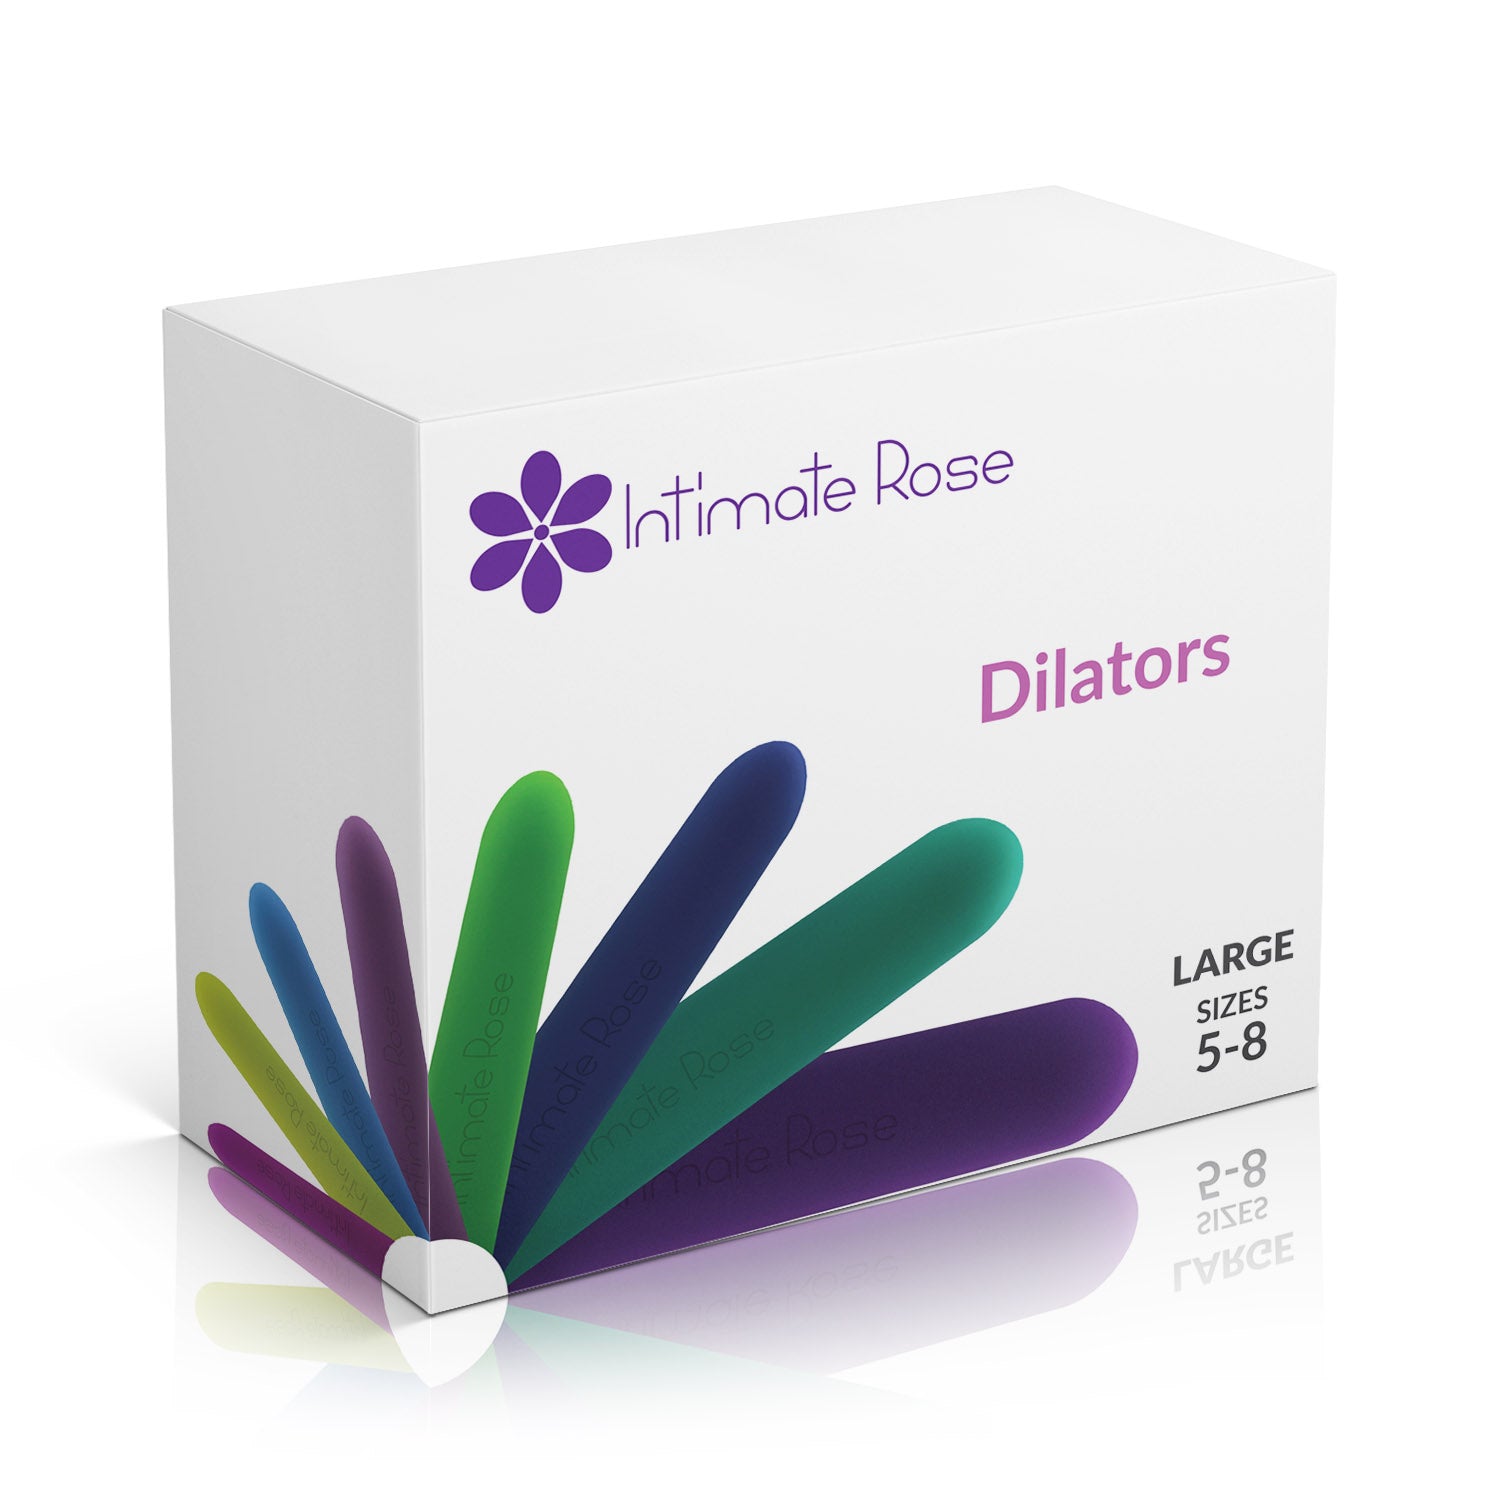 Silicone Dilators - Large Set (4-Pack)